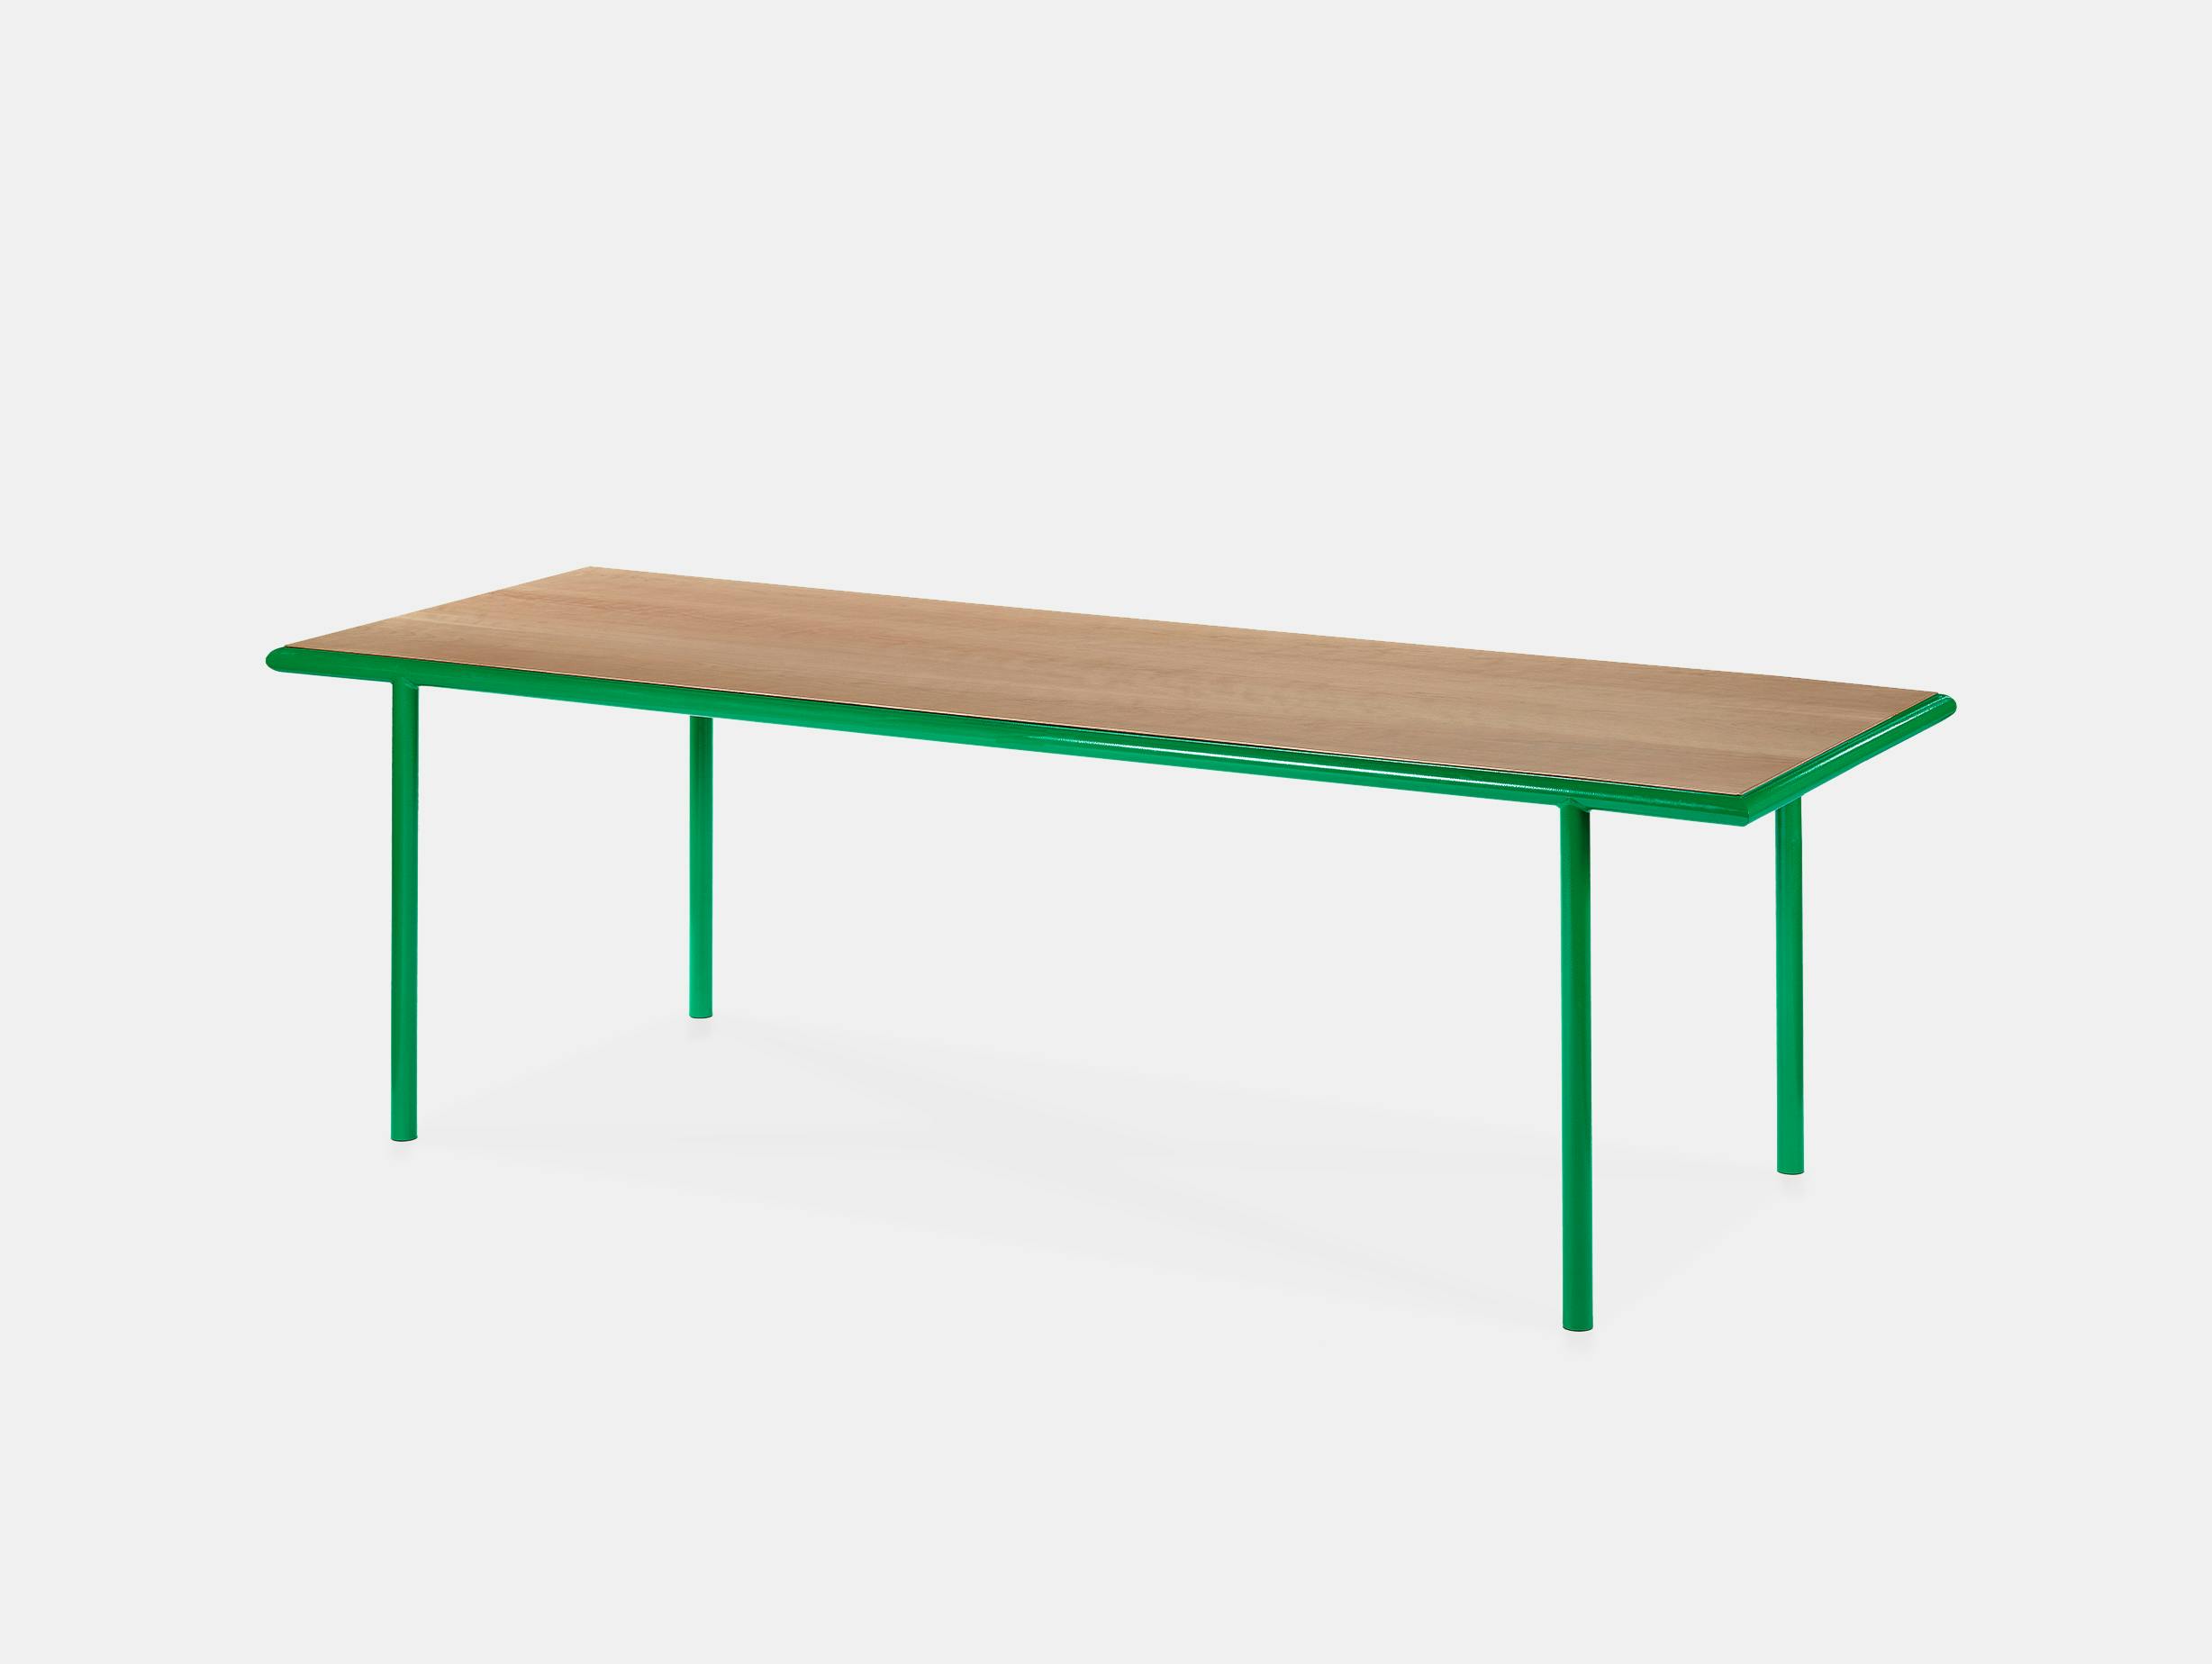 Muller van severen wooden table rectangular green cherry